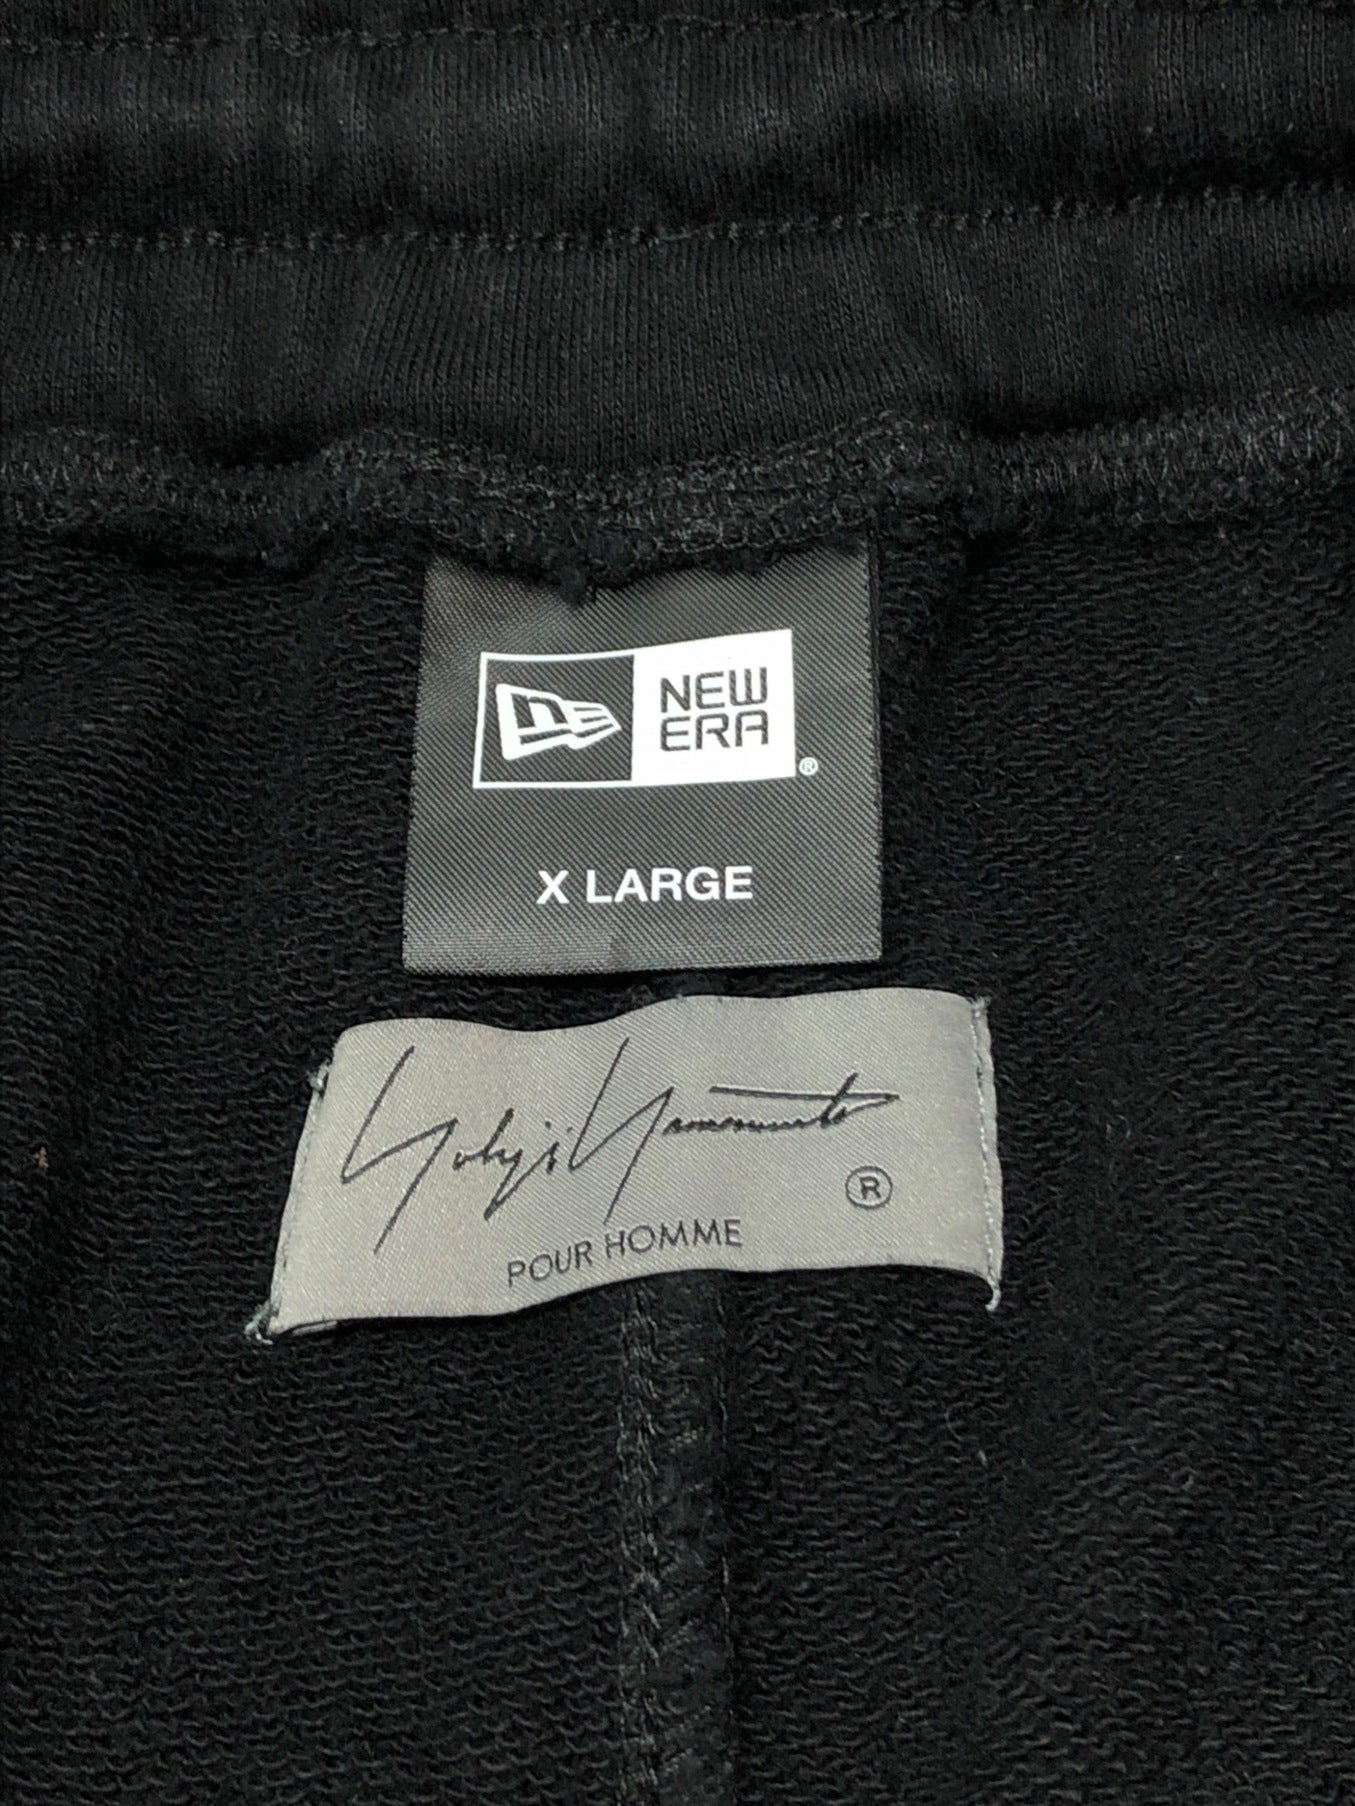 YOHJI YAMAMOTO Signature Logo Embroidery Sweatpants, Tapered/Easy HE-T95-089